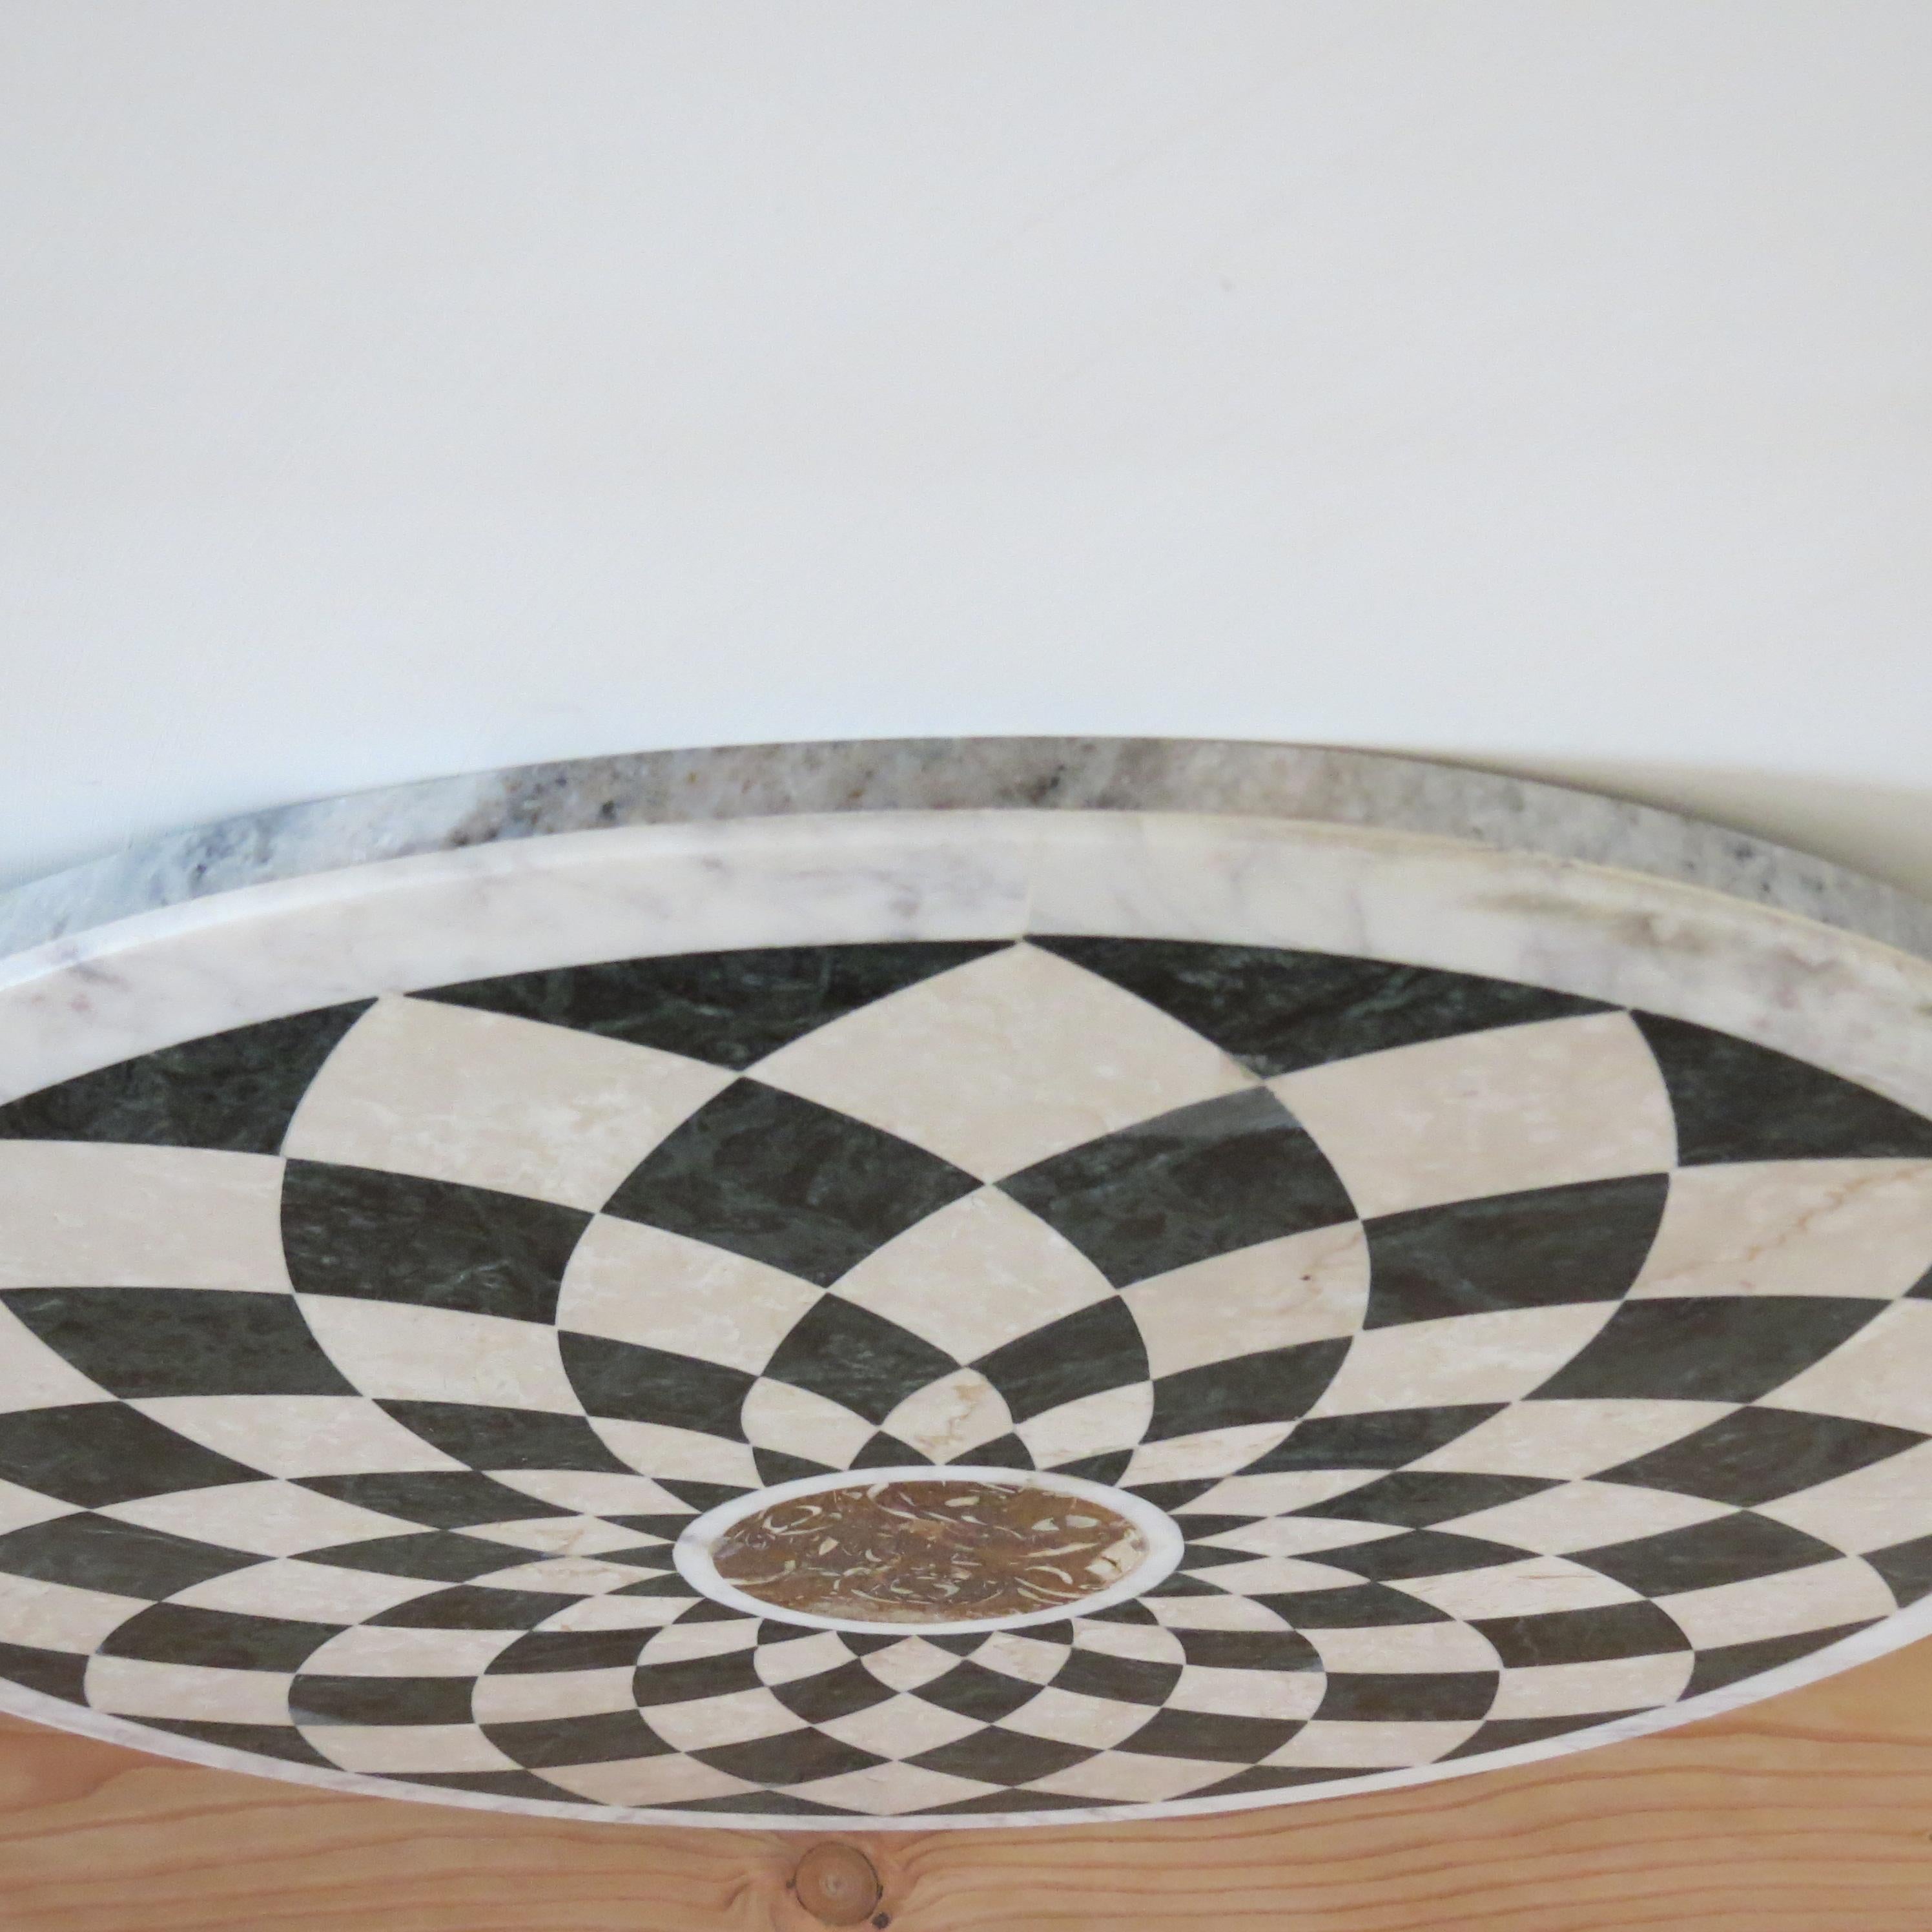 Machine-Made Pietra Dura Italian Marble Table Top Geometric Pattern Black White Monochrome